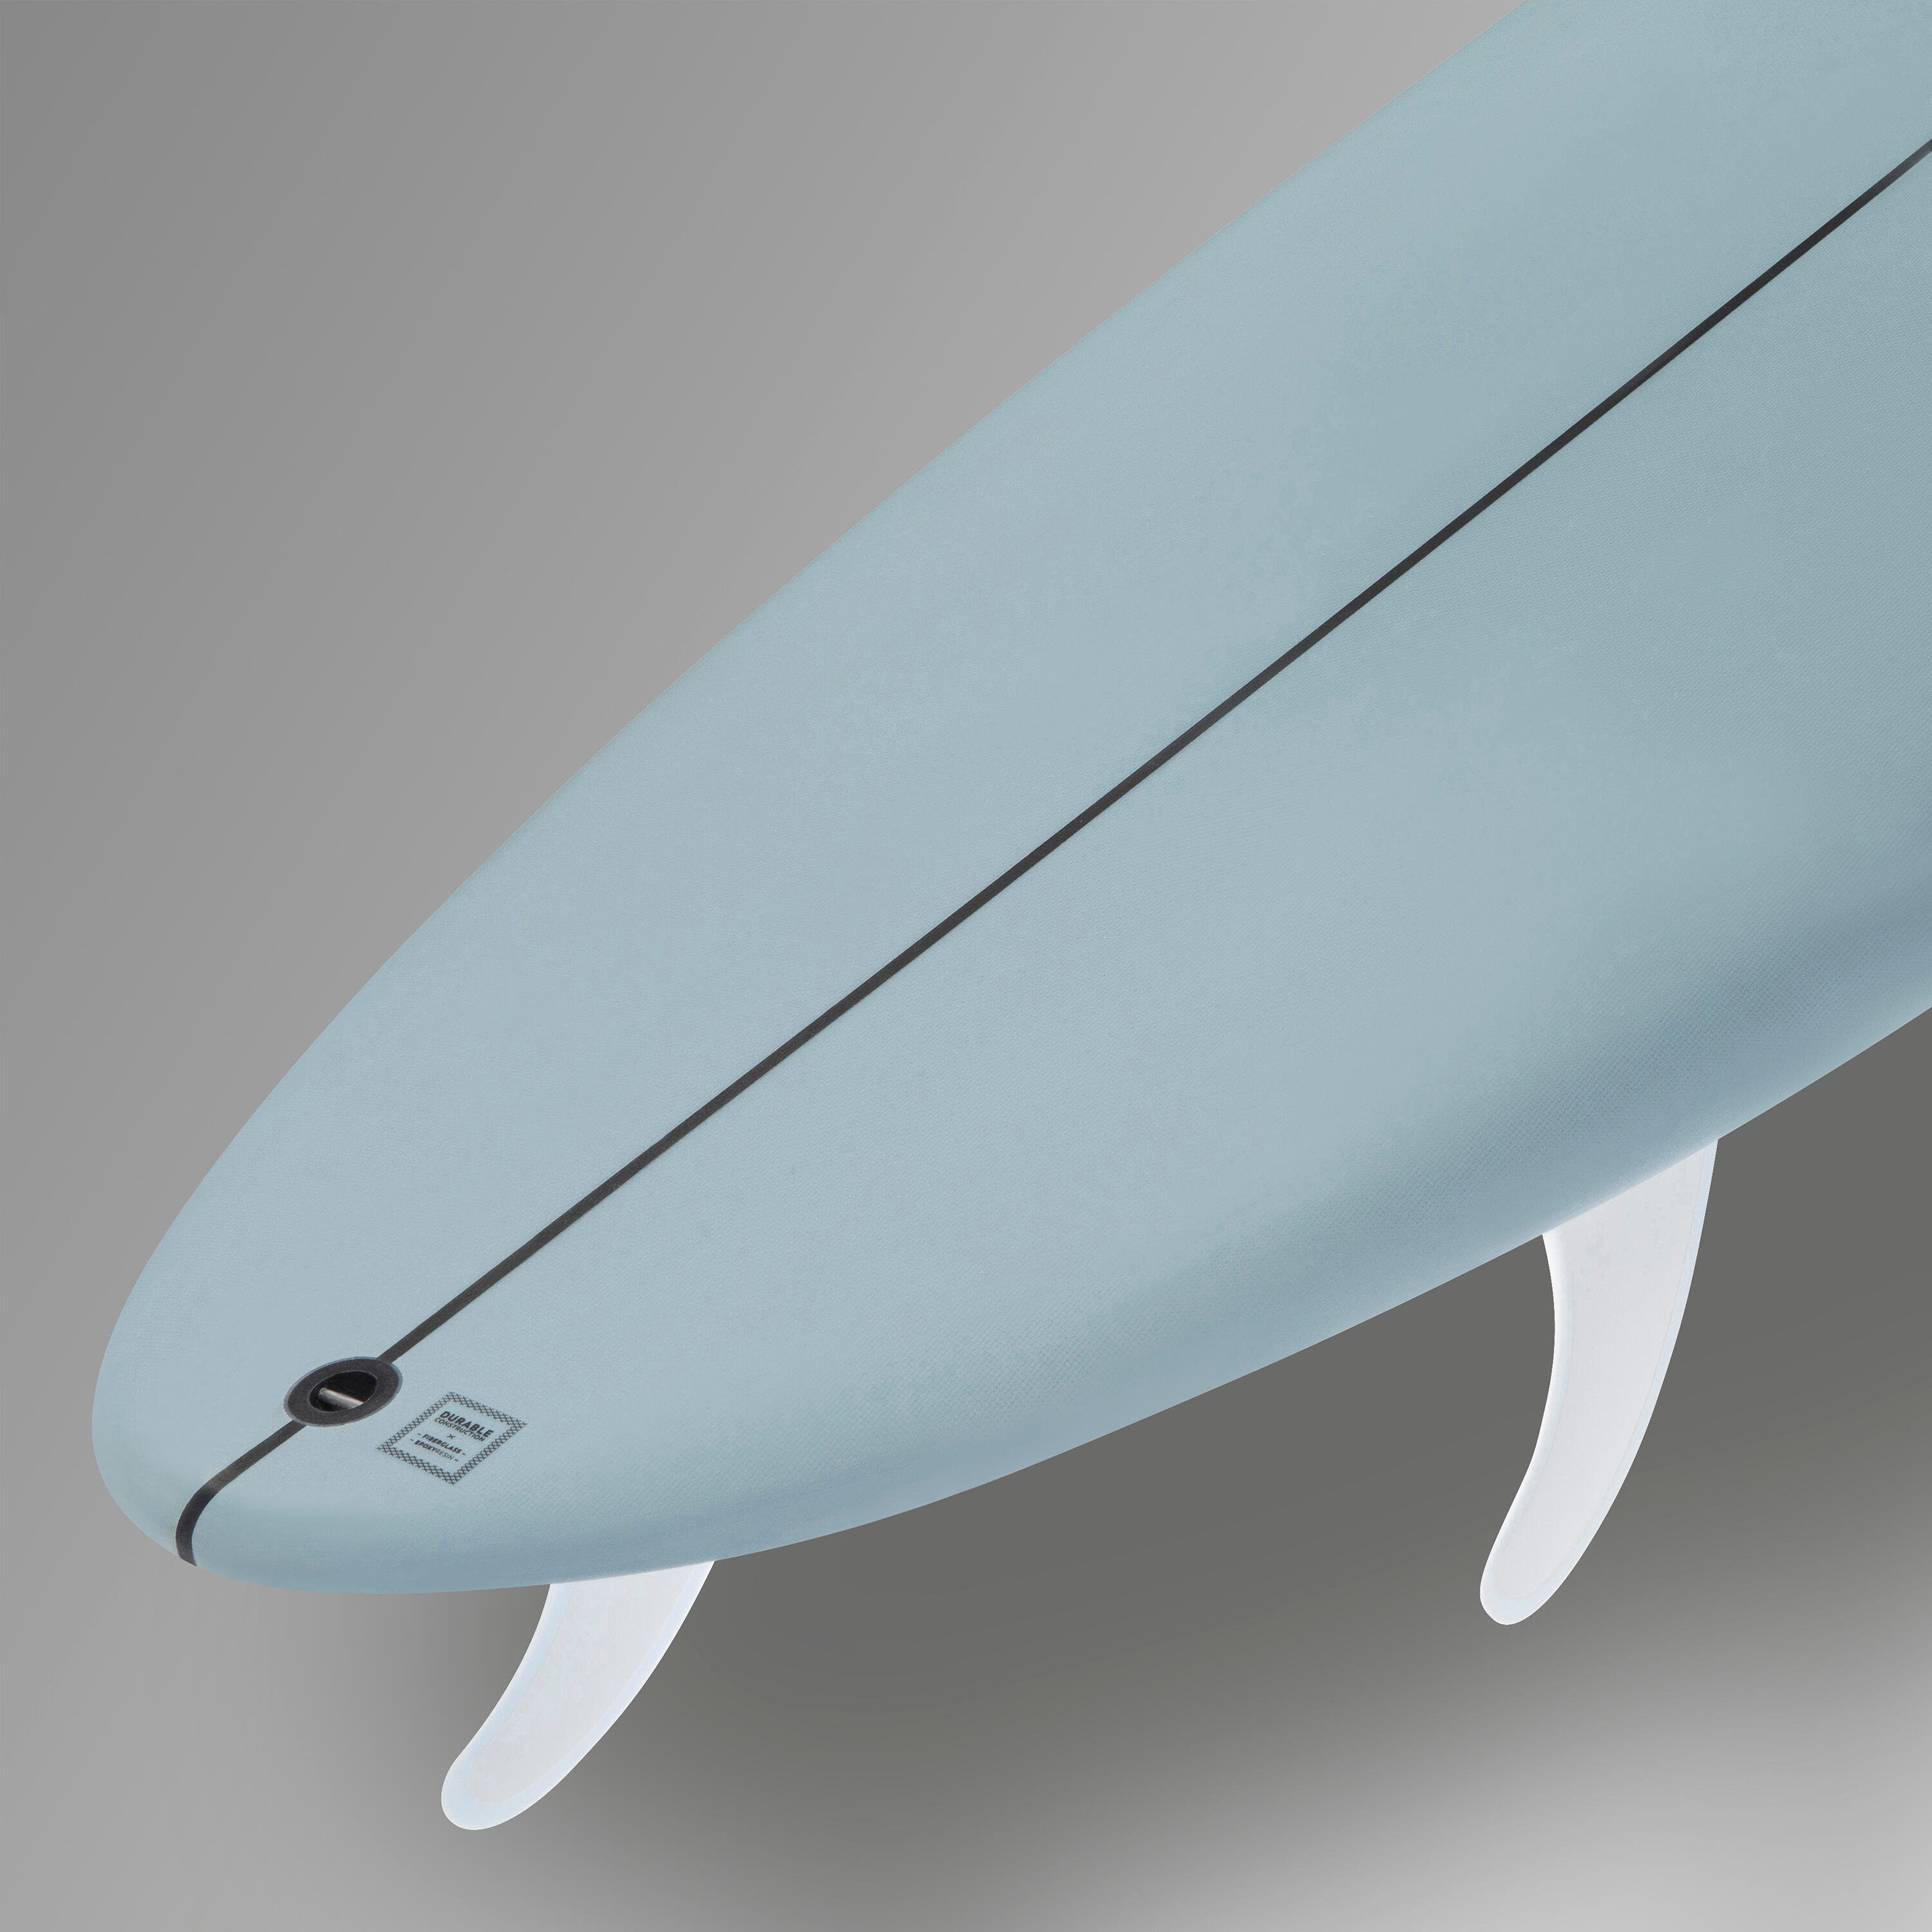 SURFBOARD 500 Hybrid 7' with three fins. 10/14